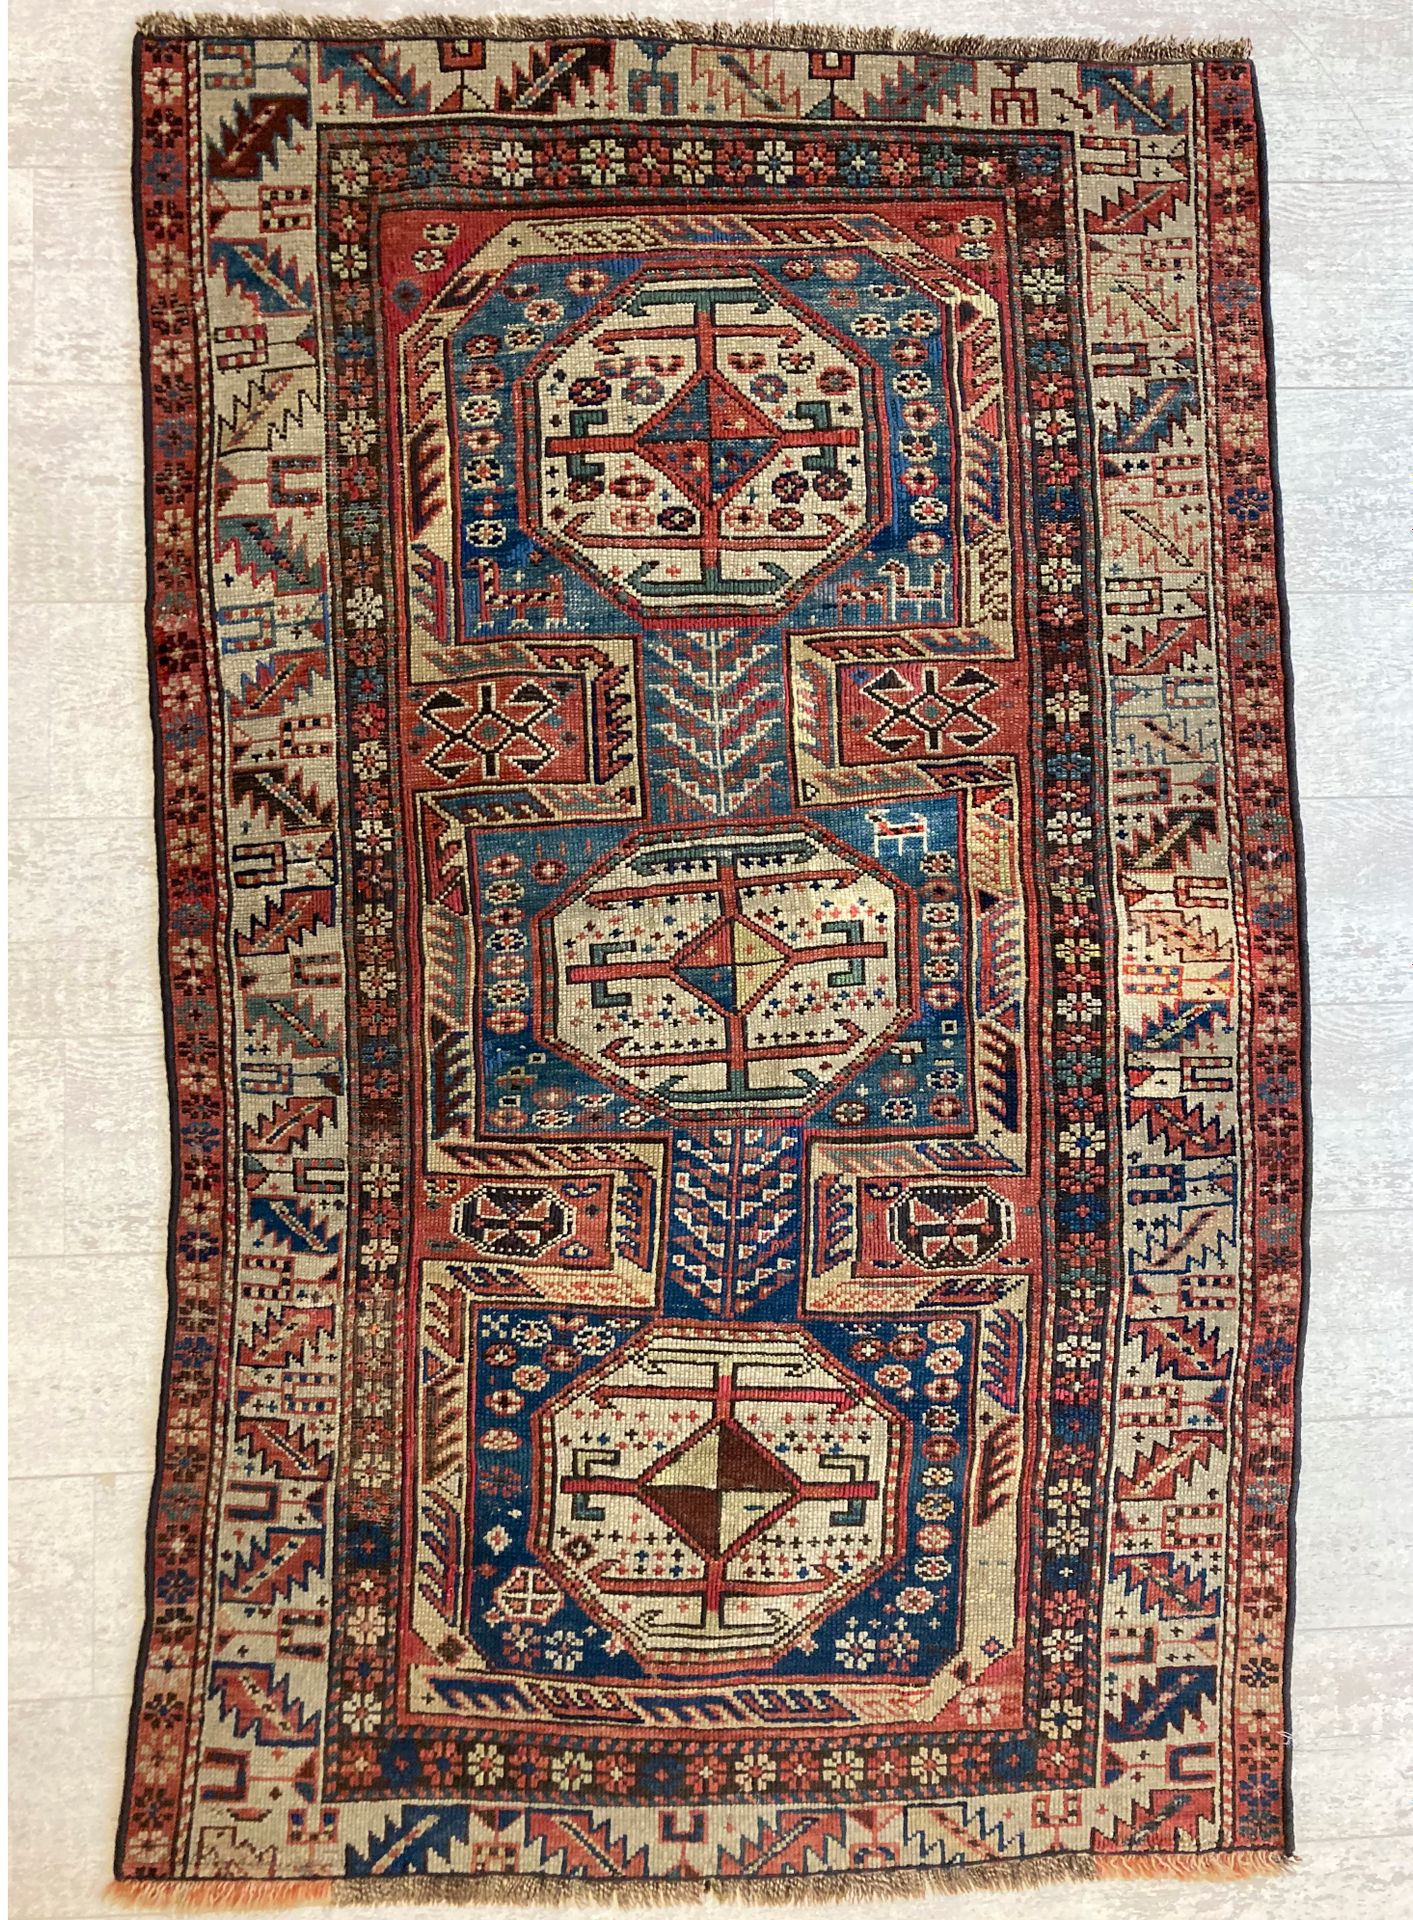 Null 哈萨克羊毛地毯，在蓝色背景上装饰有三个八角形奖章，宽边有几何图案。100 x 160厘米。(穿着)